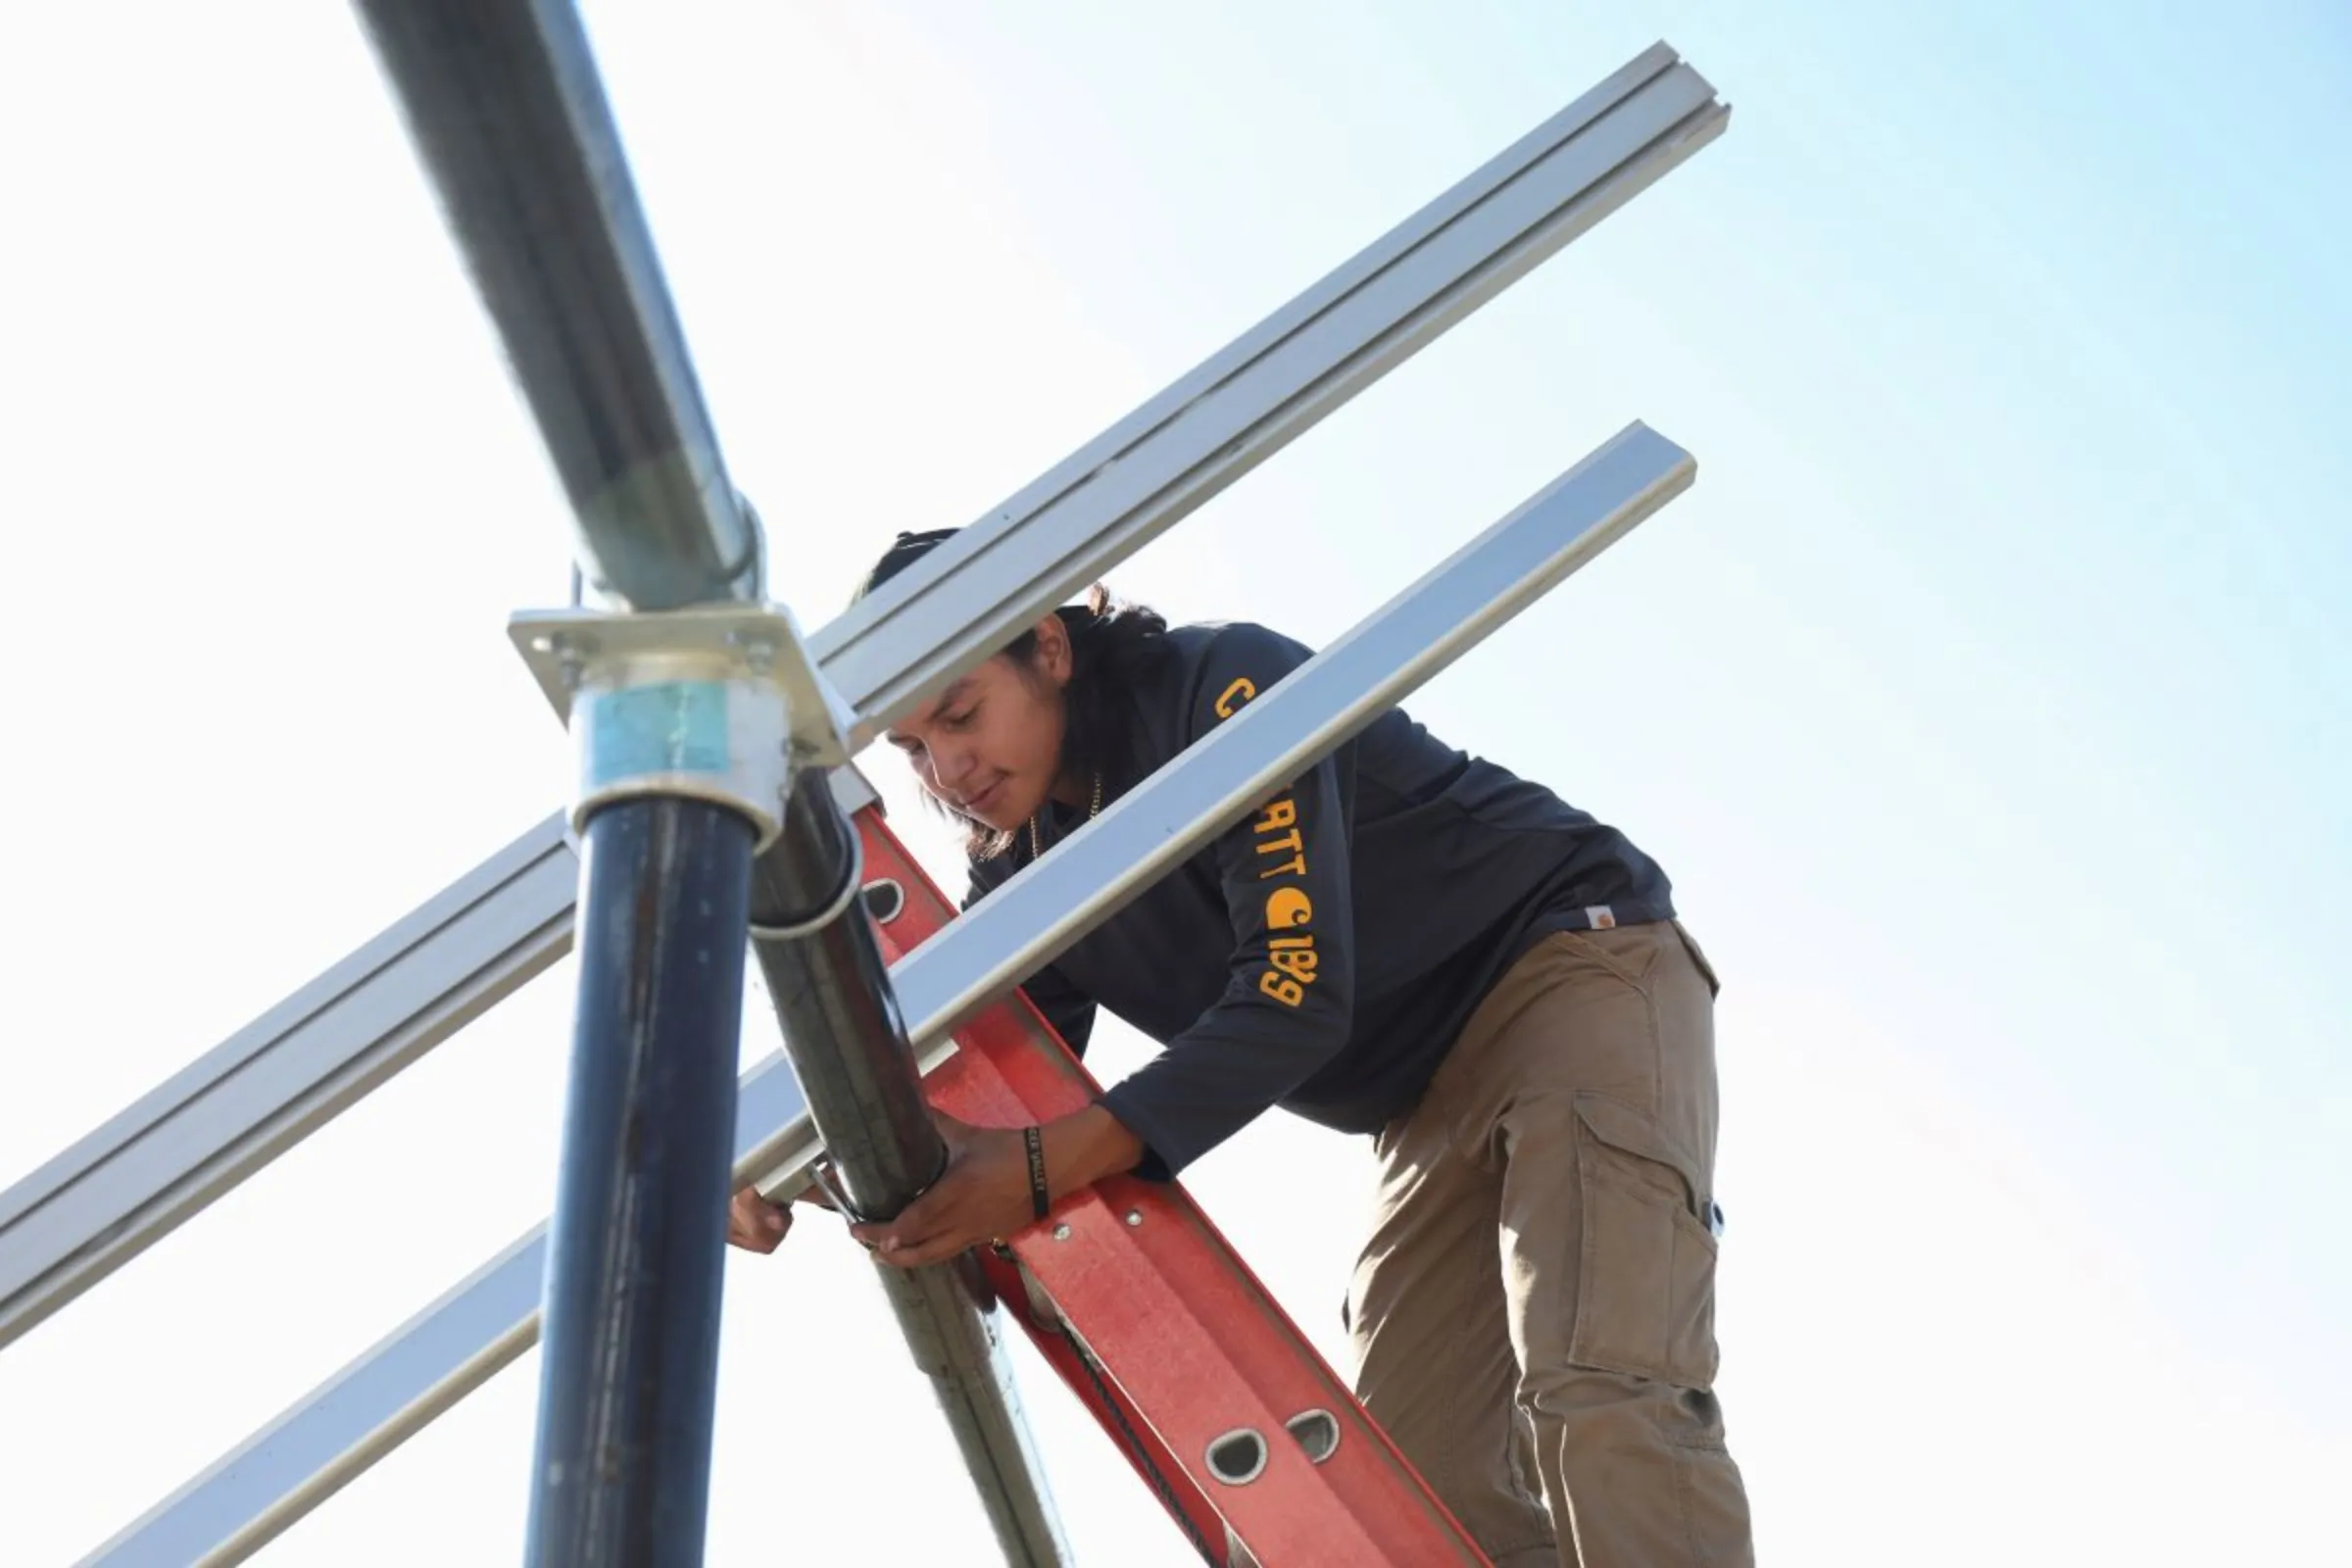 A person installs solar panels on the Pine Ridge reservation in South Dakota, U.S., September 24, 2018. Picture taken September 24, 2018. REUTERS/Emilie Richardson